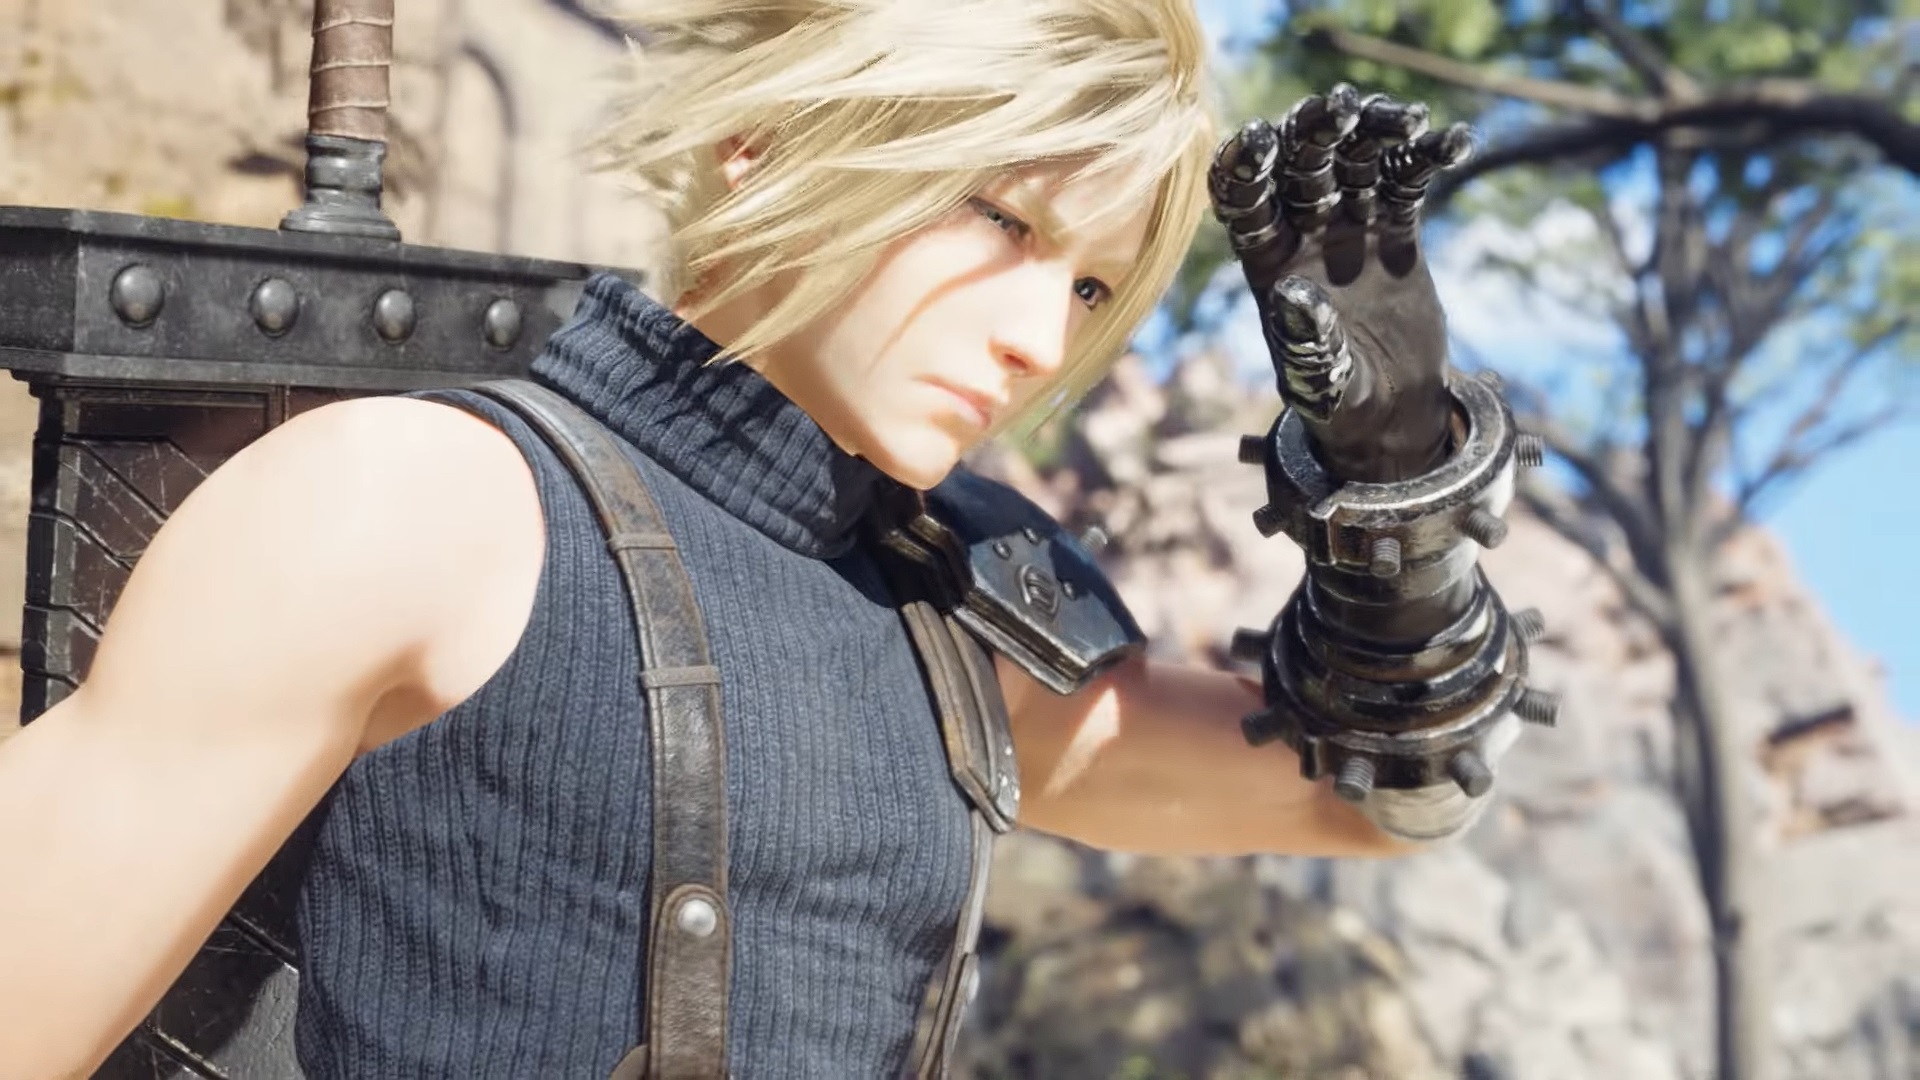 Final Fantasy 7 Rebirth: New story details, ending revealed